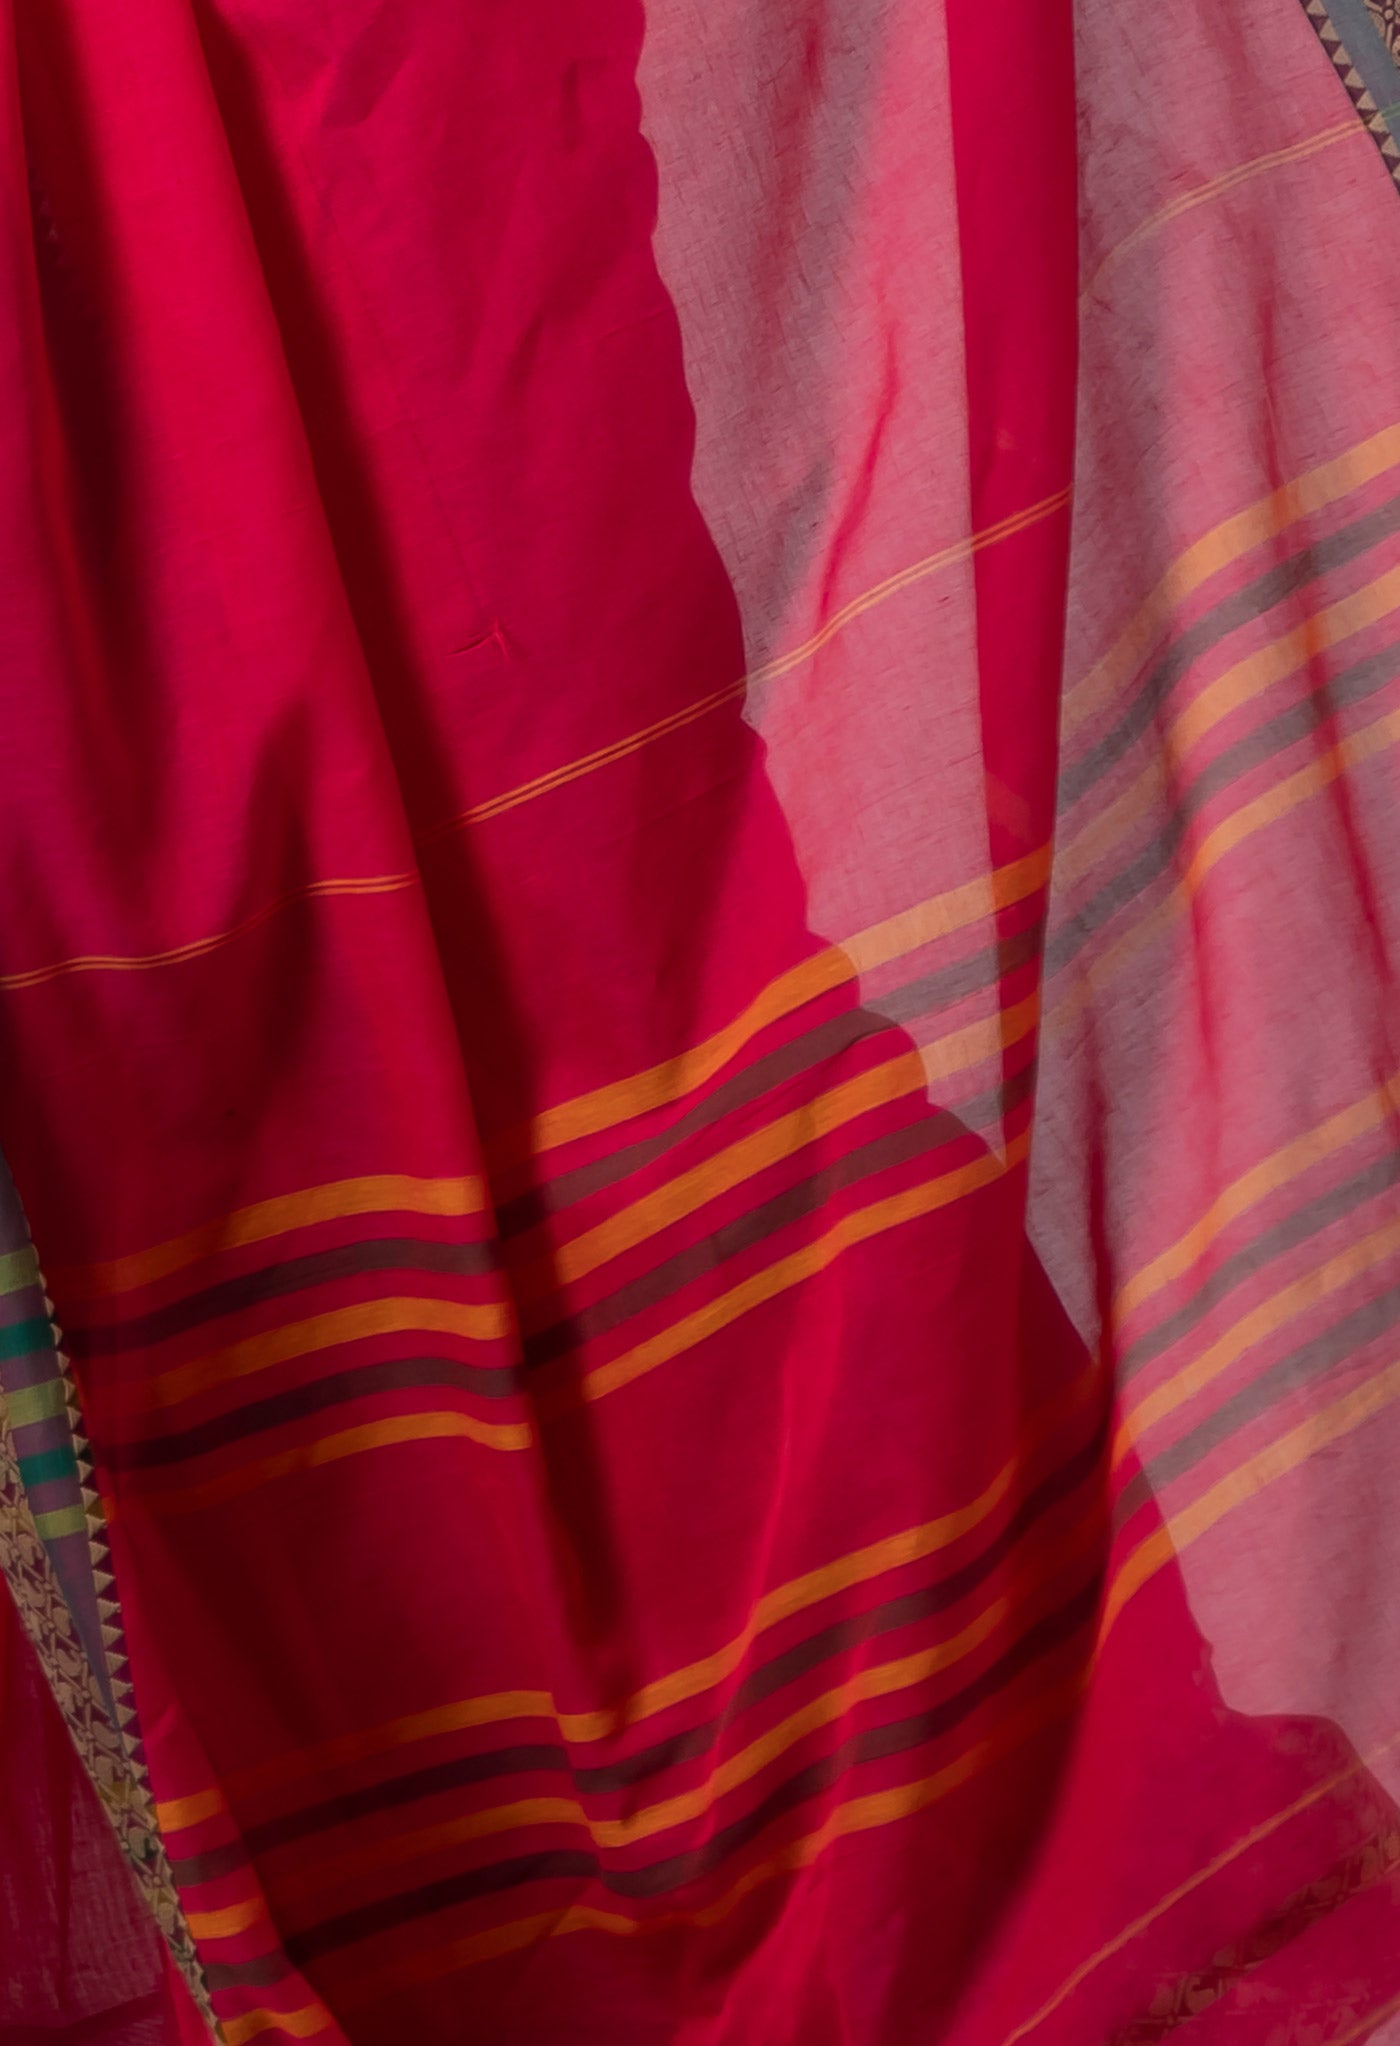 Pink Pure Handloom Narayani Cotton Saree